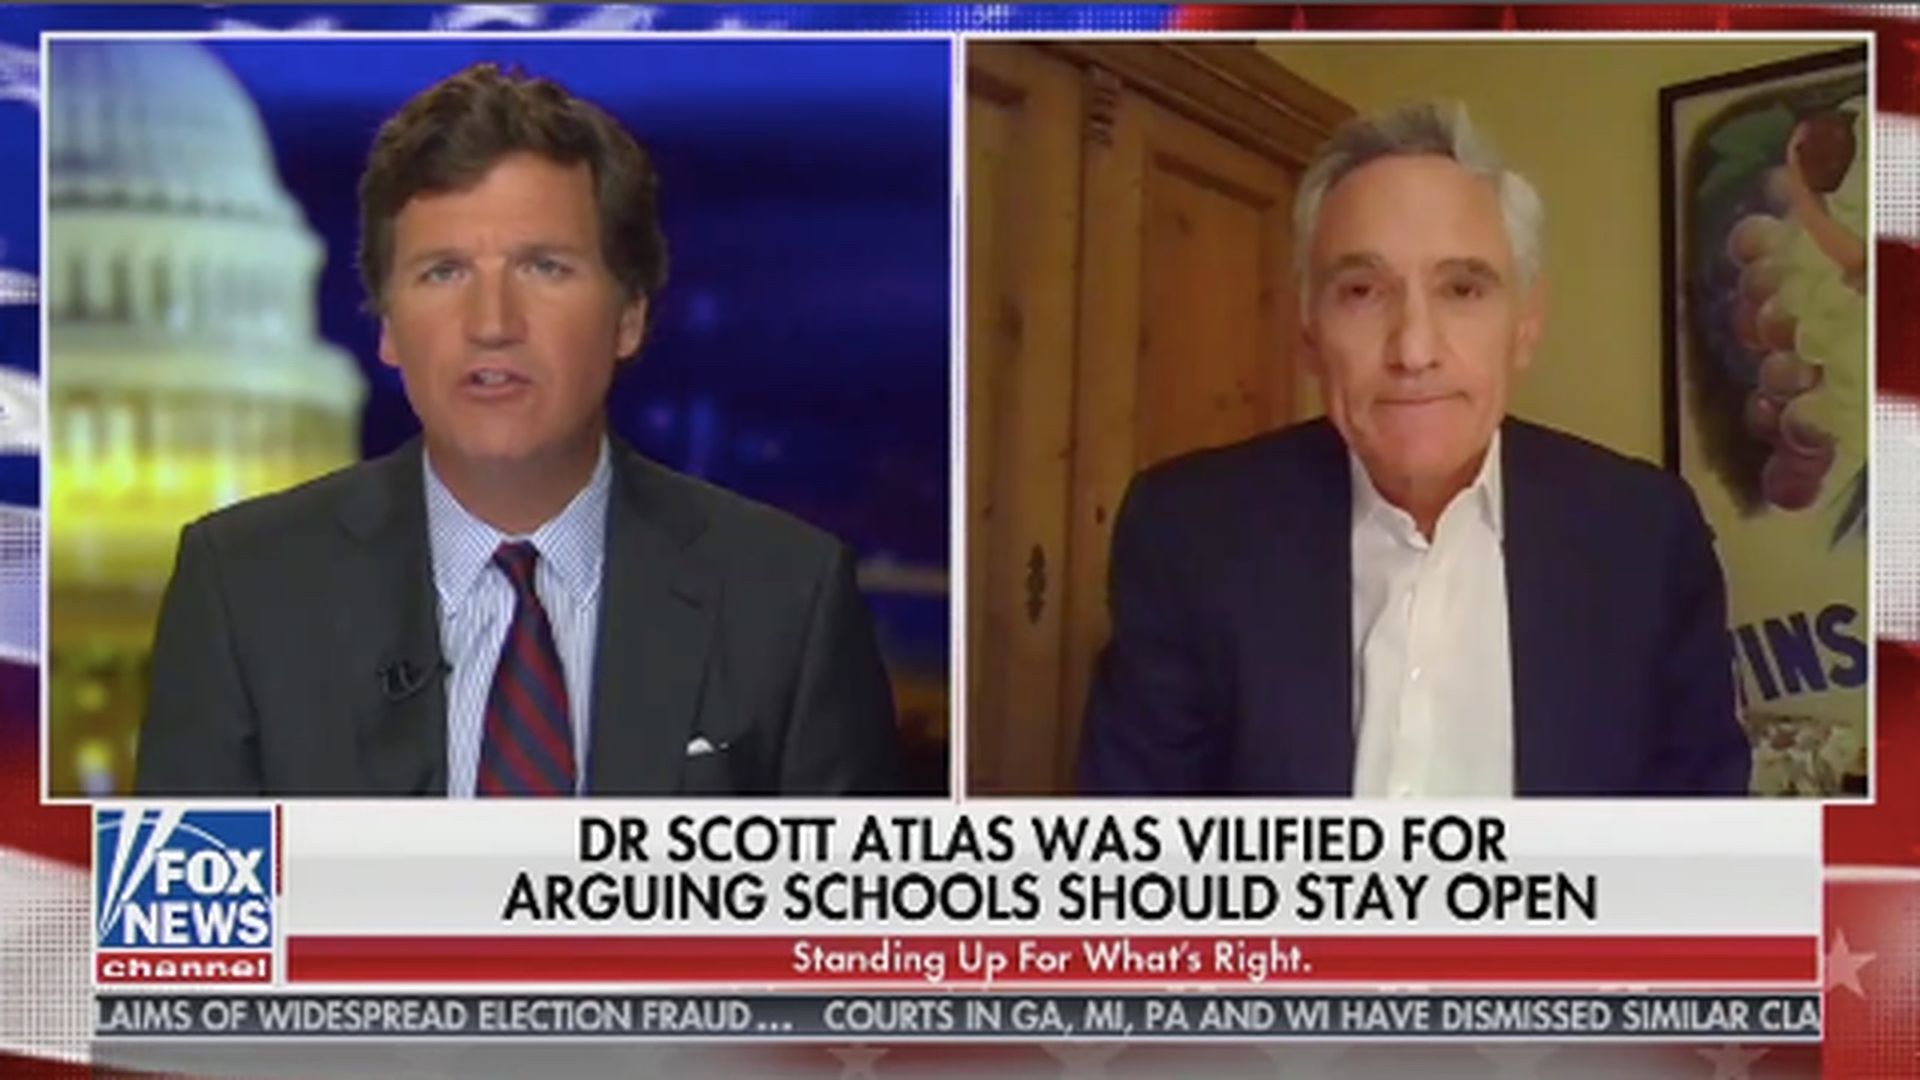 Tucker Carlson interviews Dr. Scott Atlas via split-screen during his program Monday night.